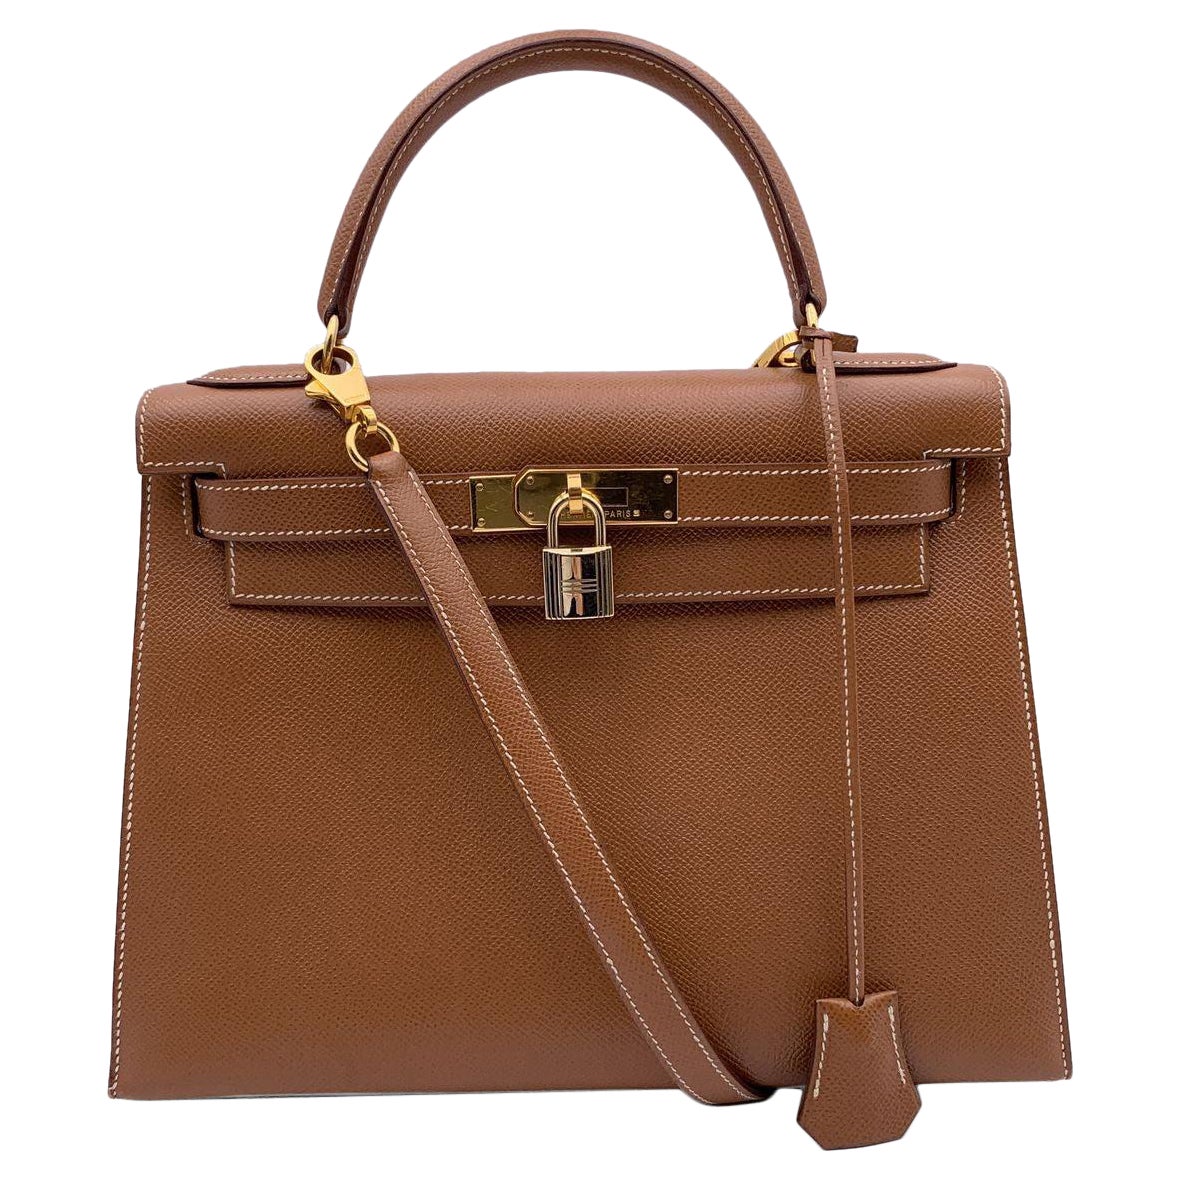 Hermes Vintage Beige Leather Kelly 28 cm Sellier Bag Handbag